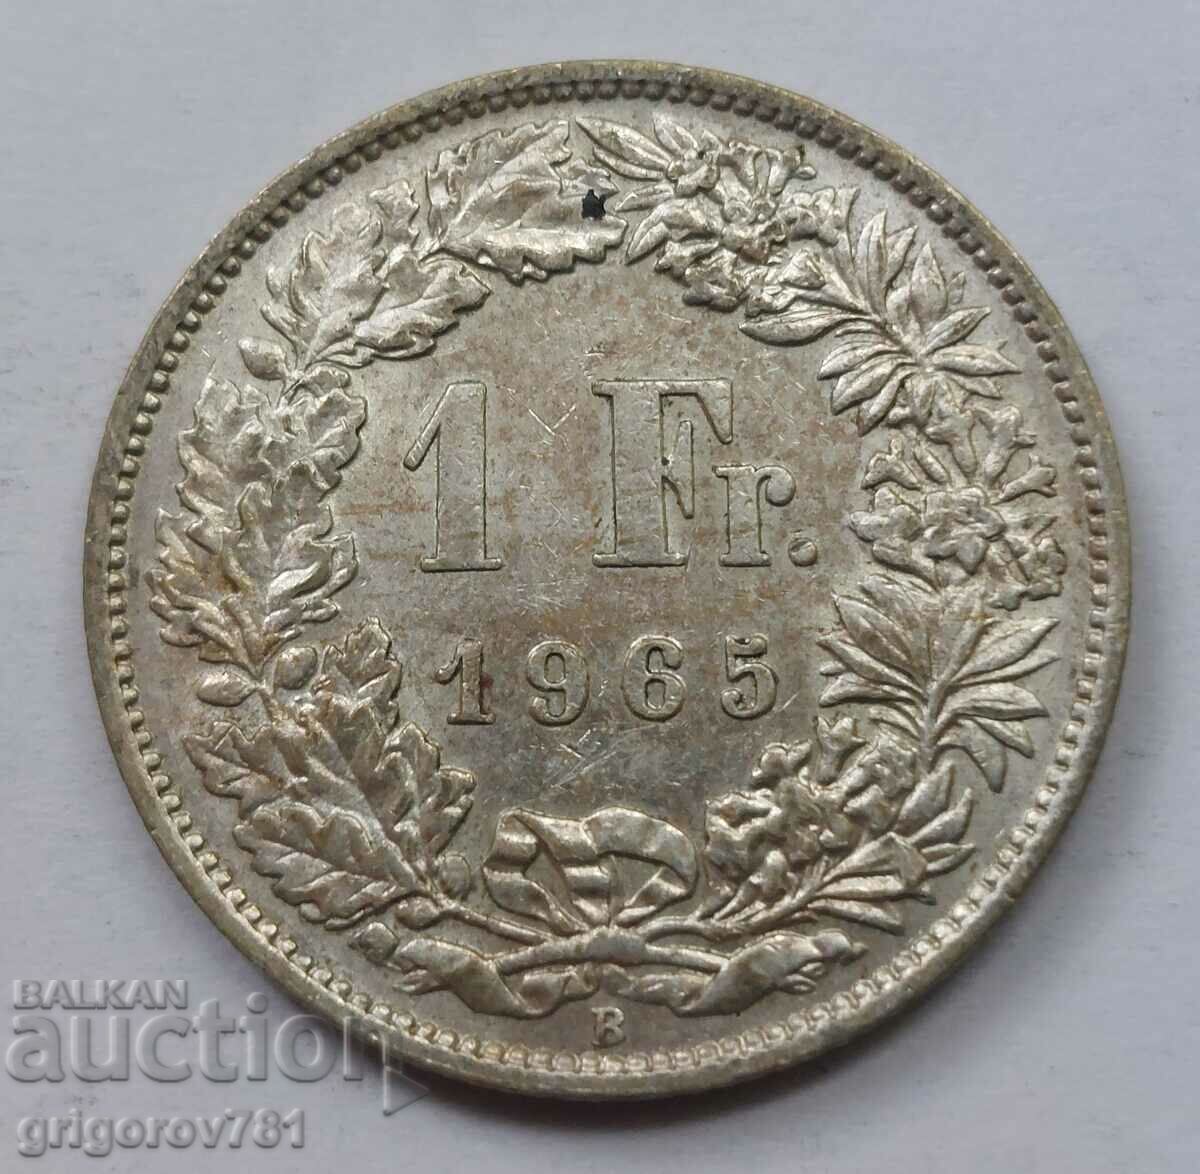 1 Franc Silver Switzerland 1965 B - Silver Coin #33